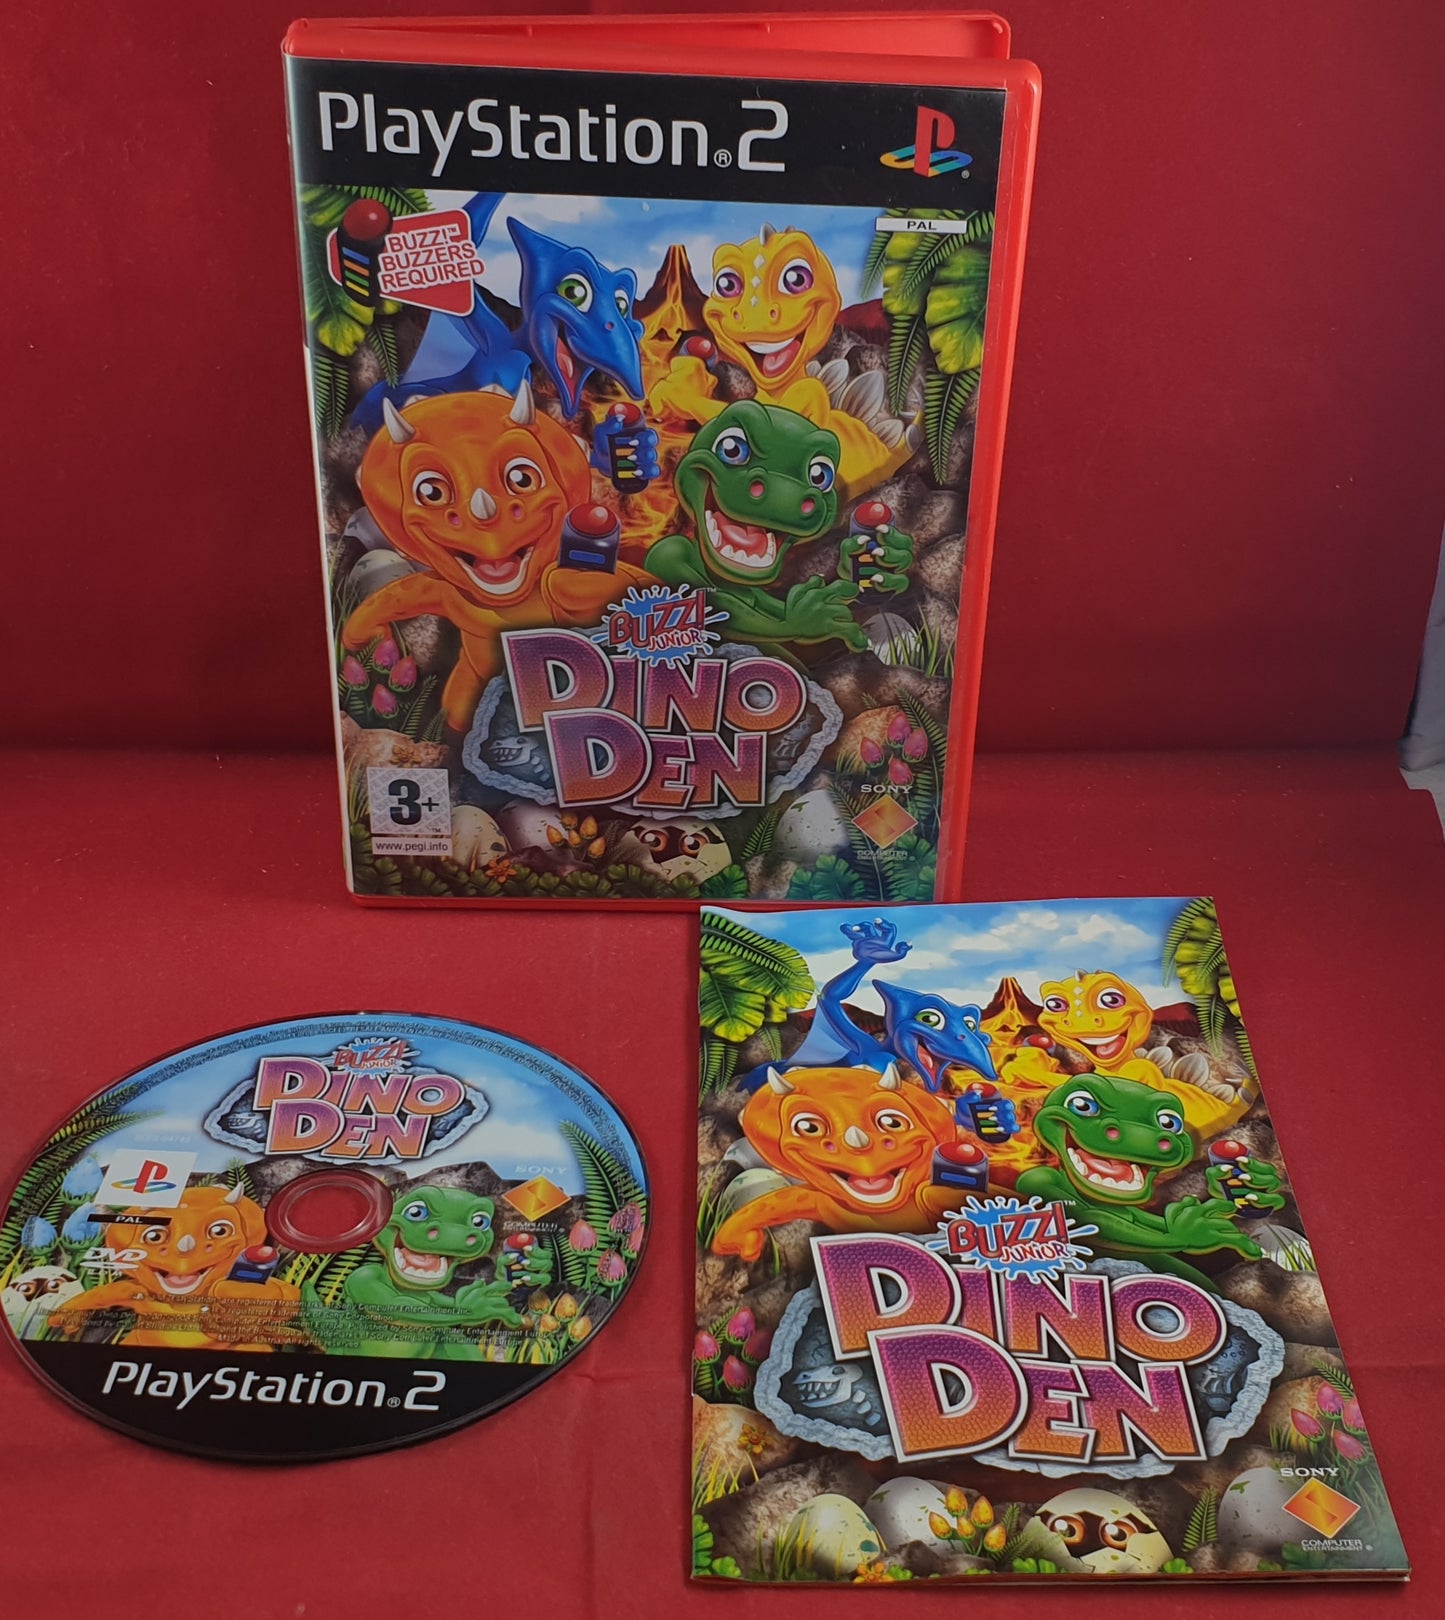 Buzz Junior Dino Den Sony Playstation 2 (PS2) Game